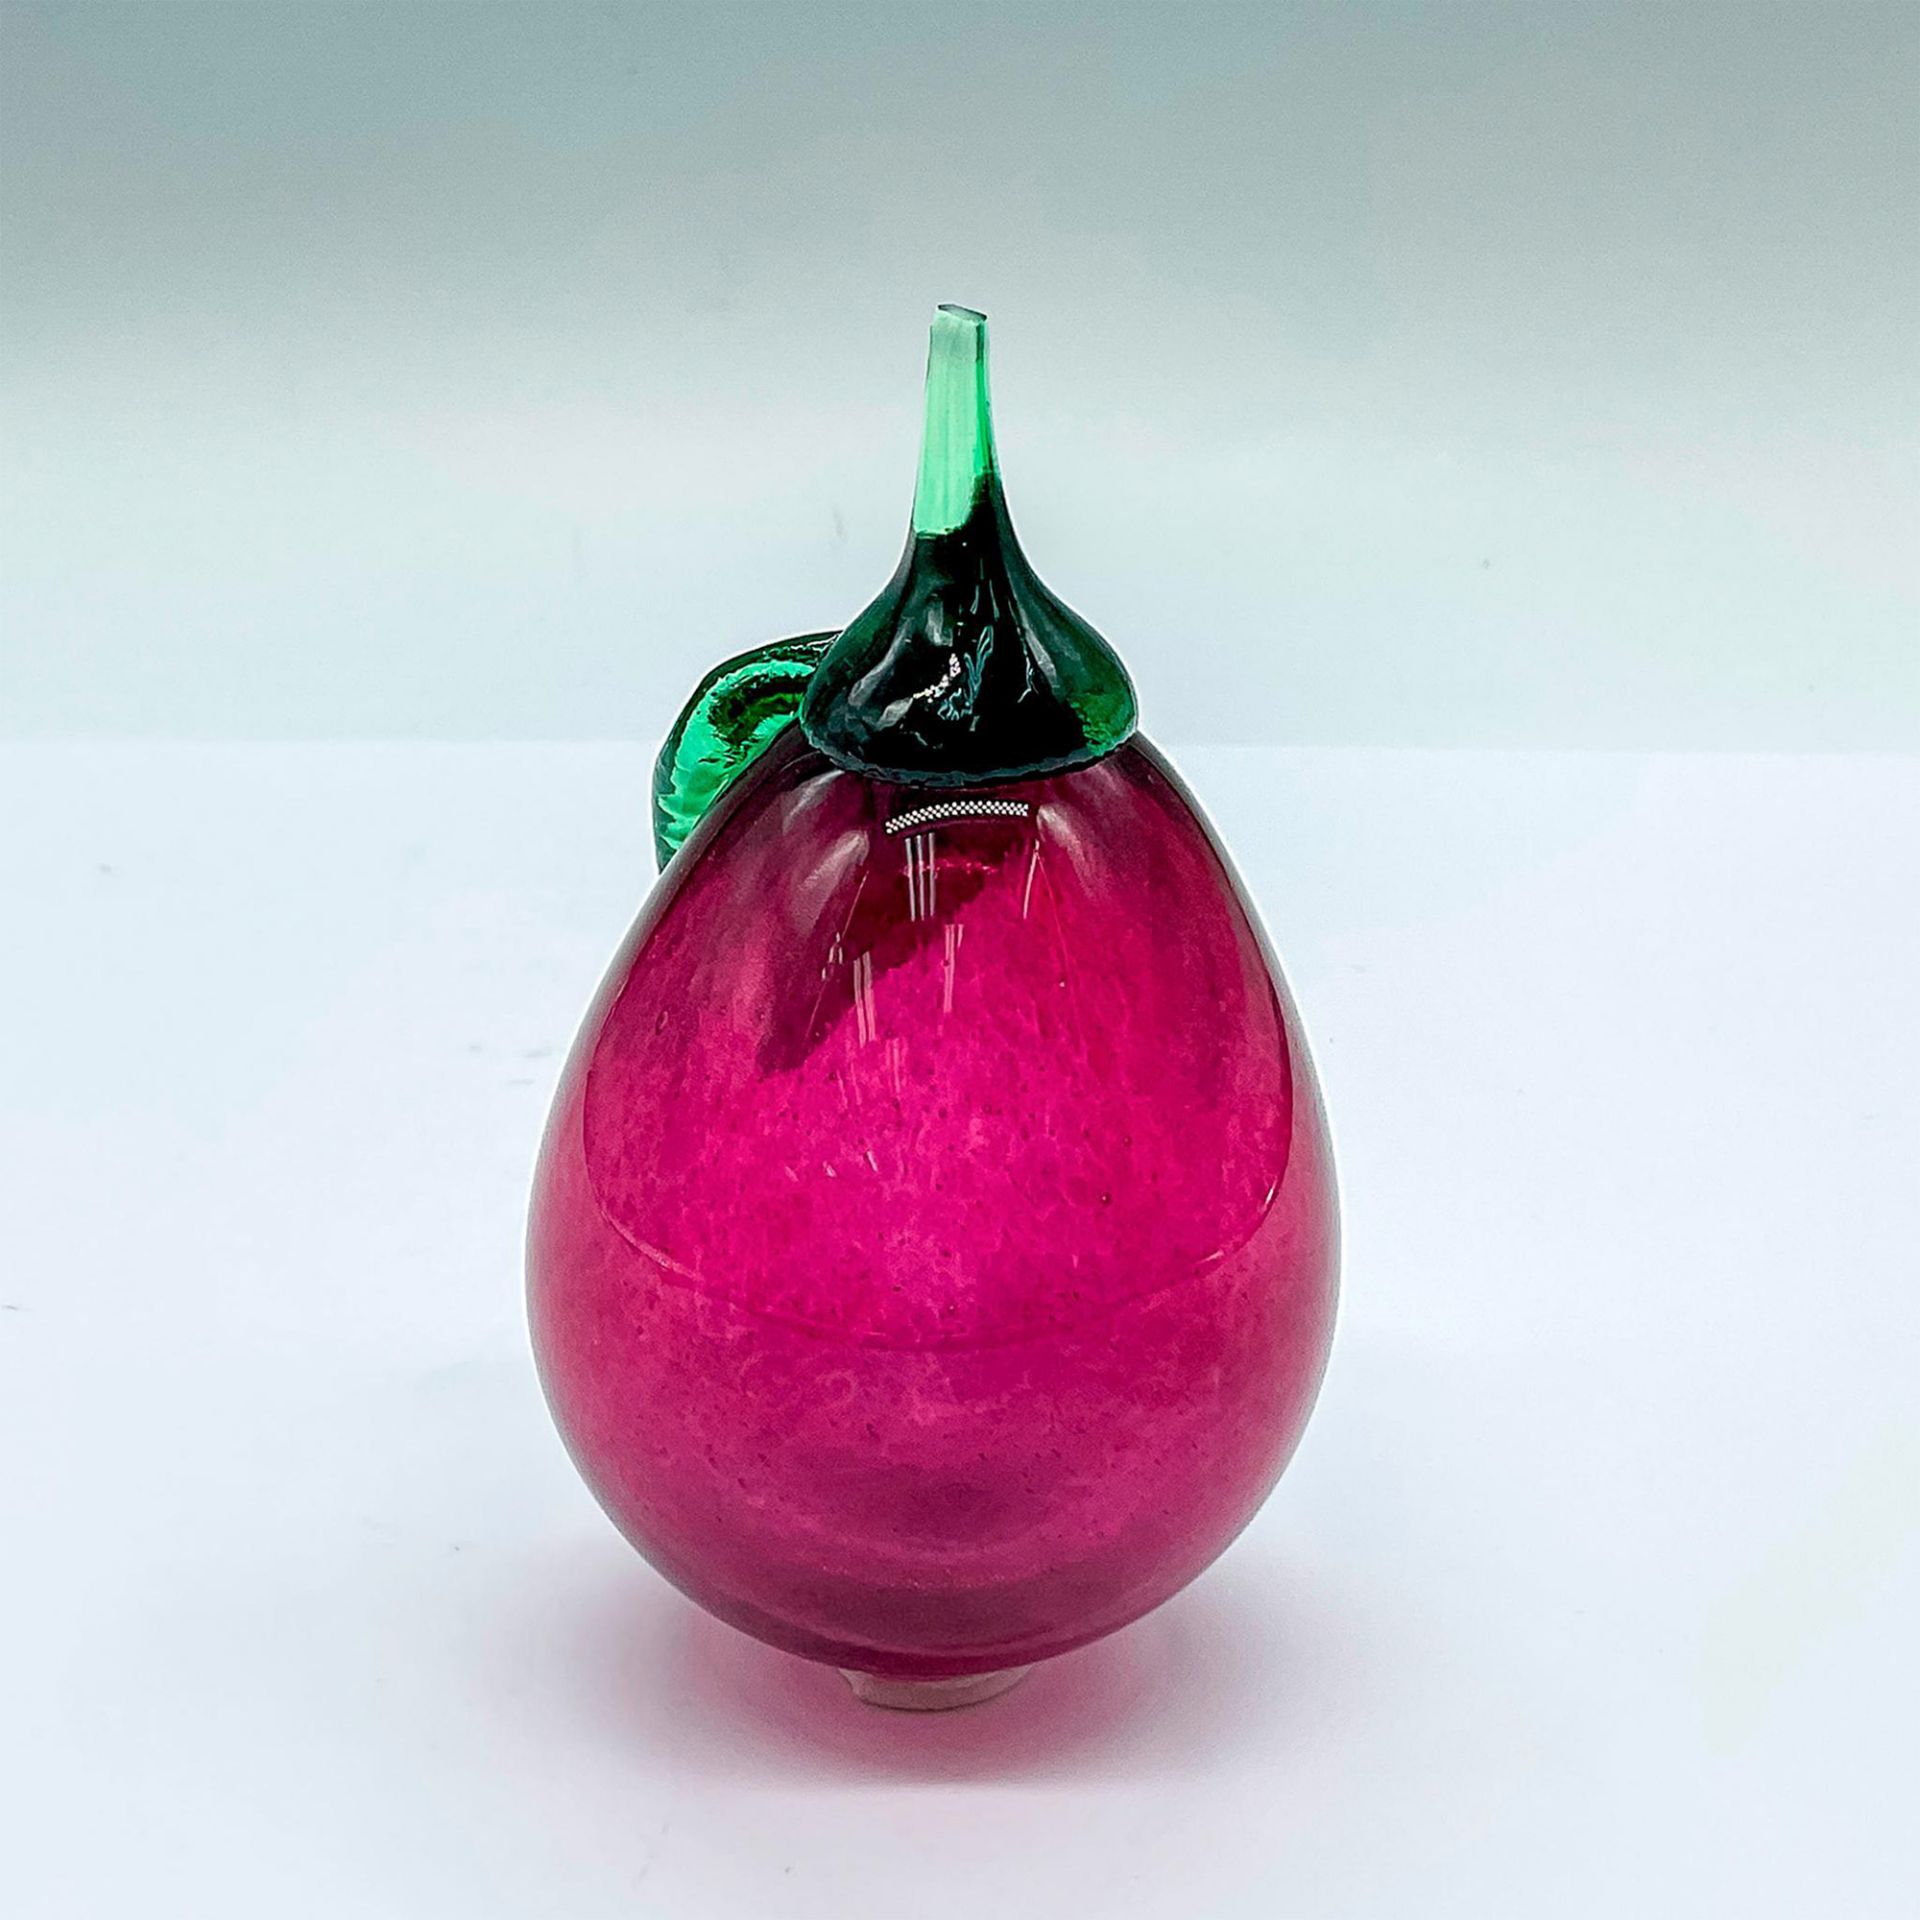 Art Glass Eggplant Figurine - Image 2 of 3